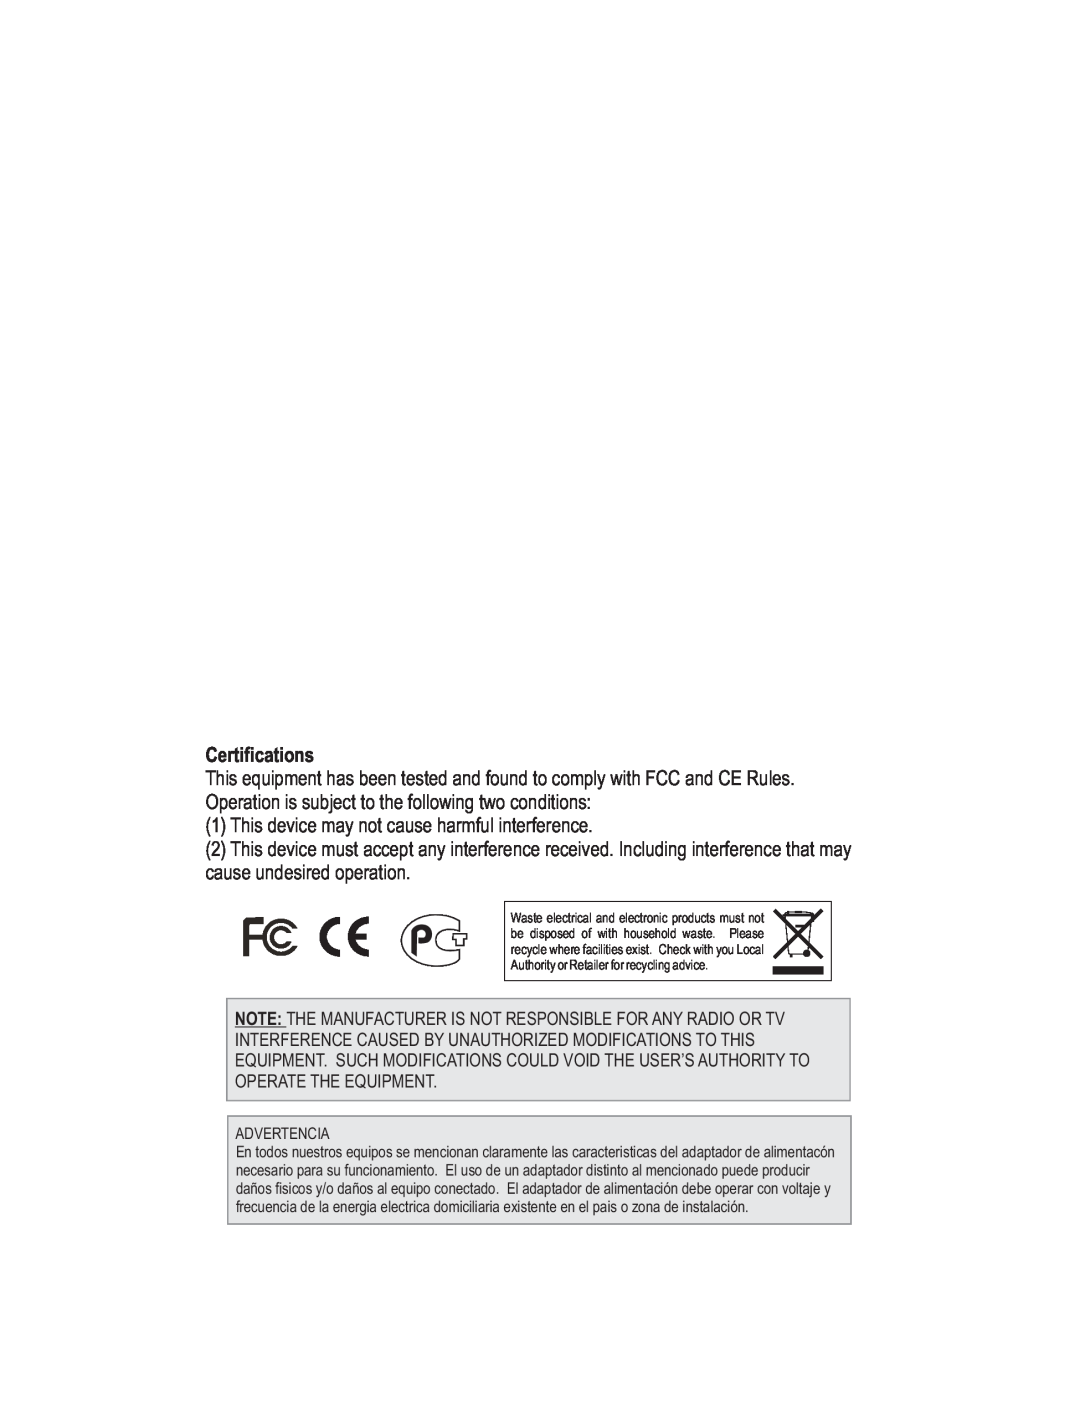 TRENDnet TEGS50G manual Certifications 